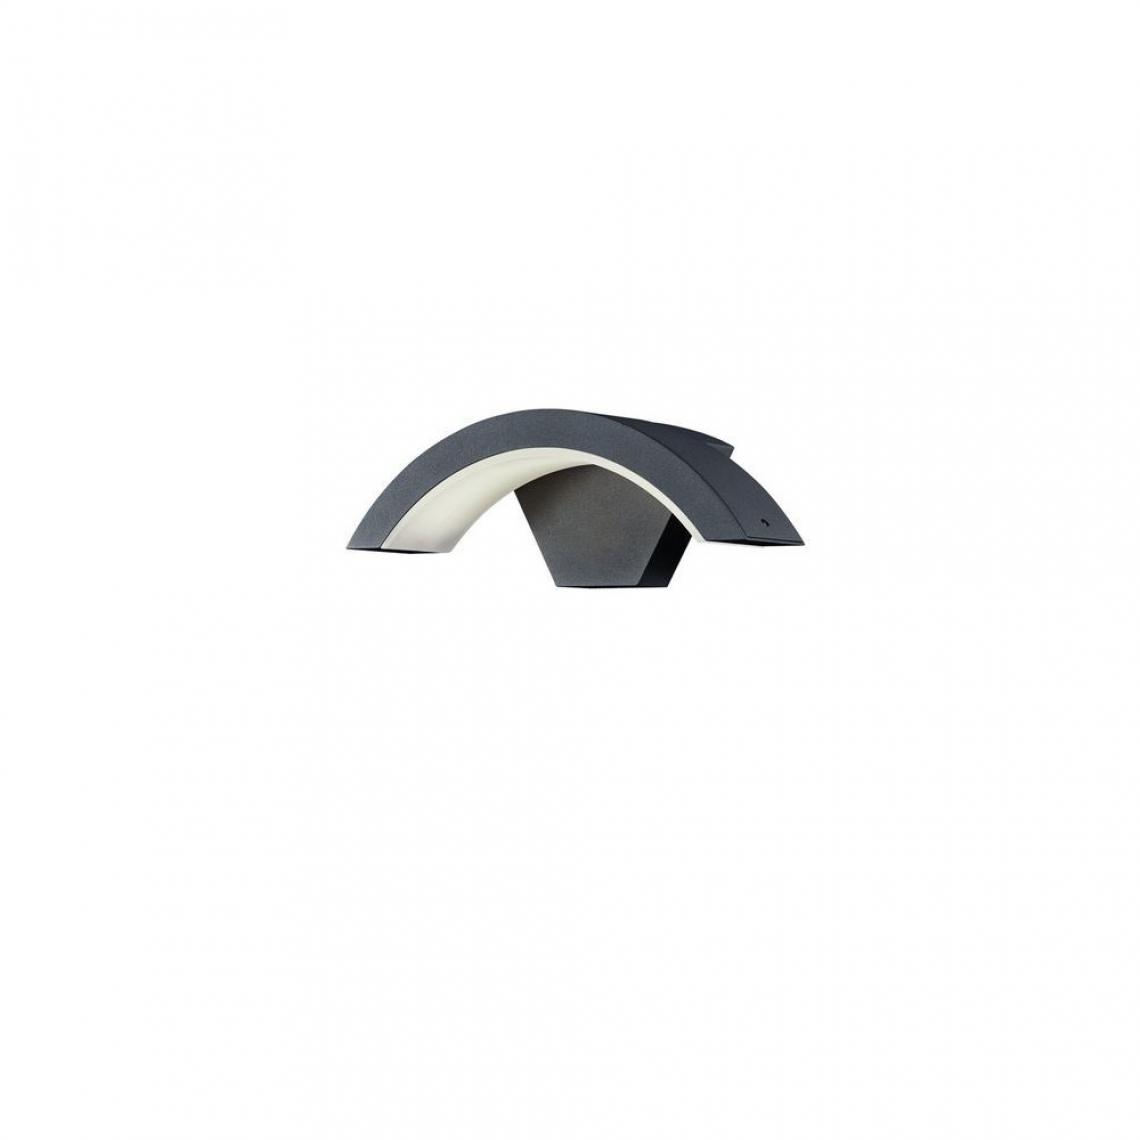 Boutica-Design - Applique Harlem Anthracite 1x6W SMD LED - Applique, hublot